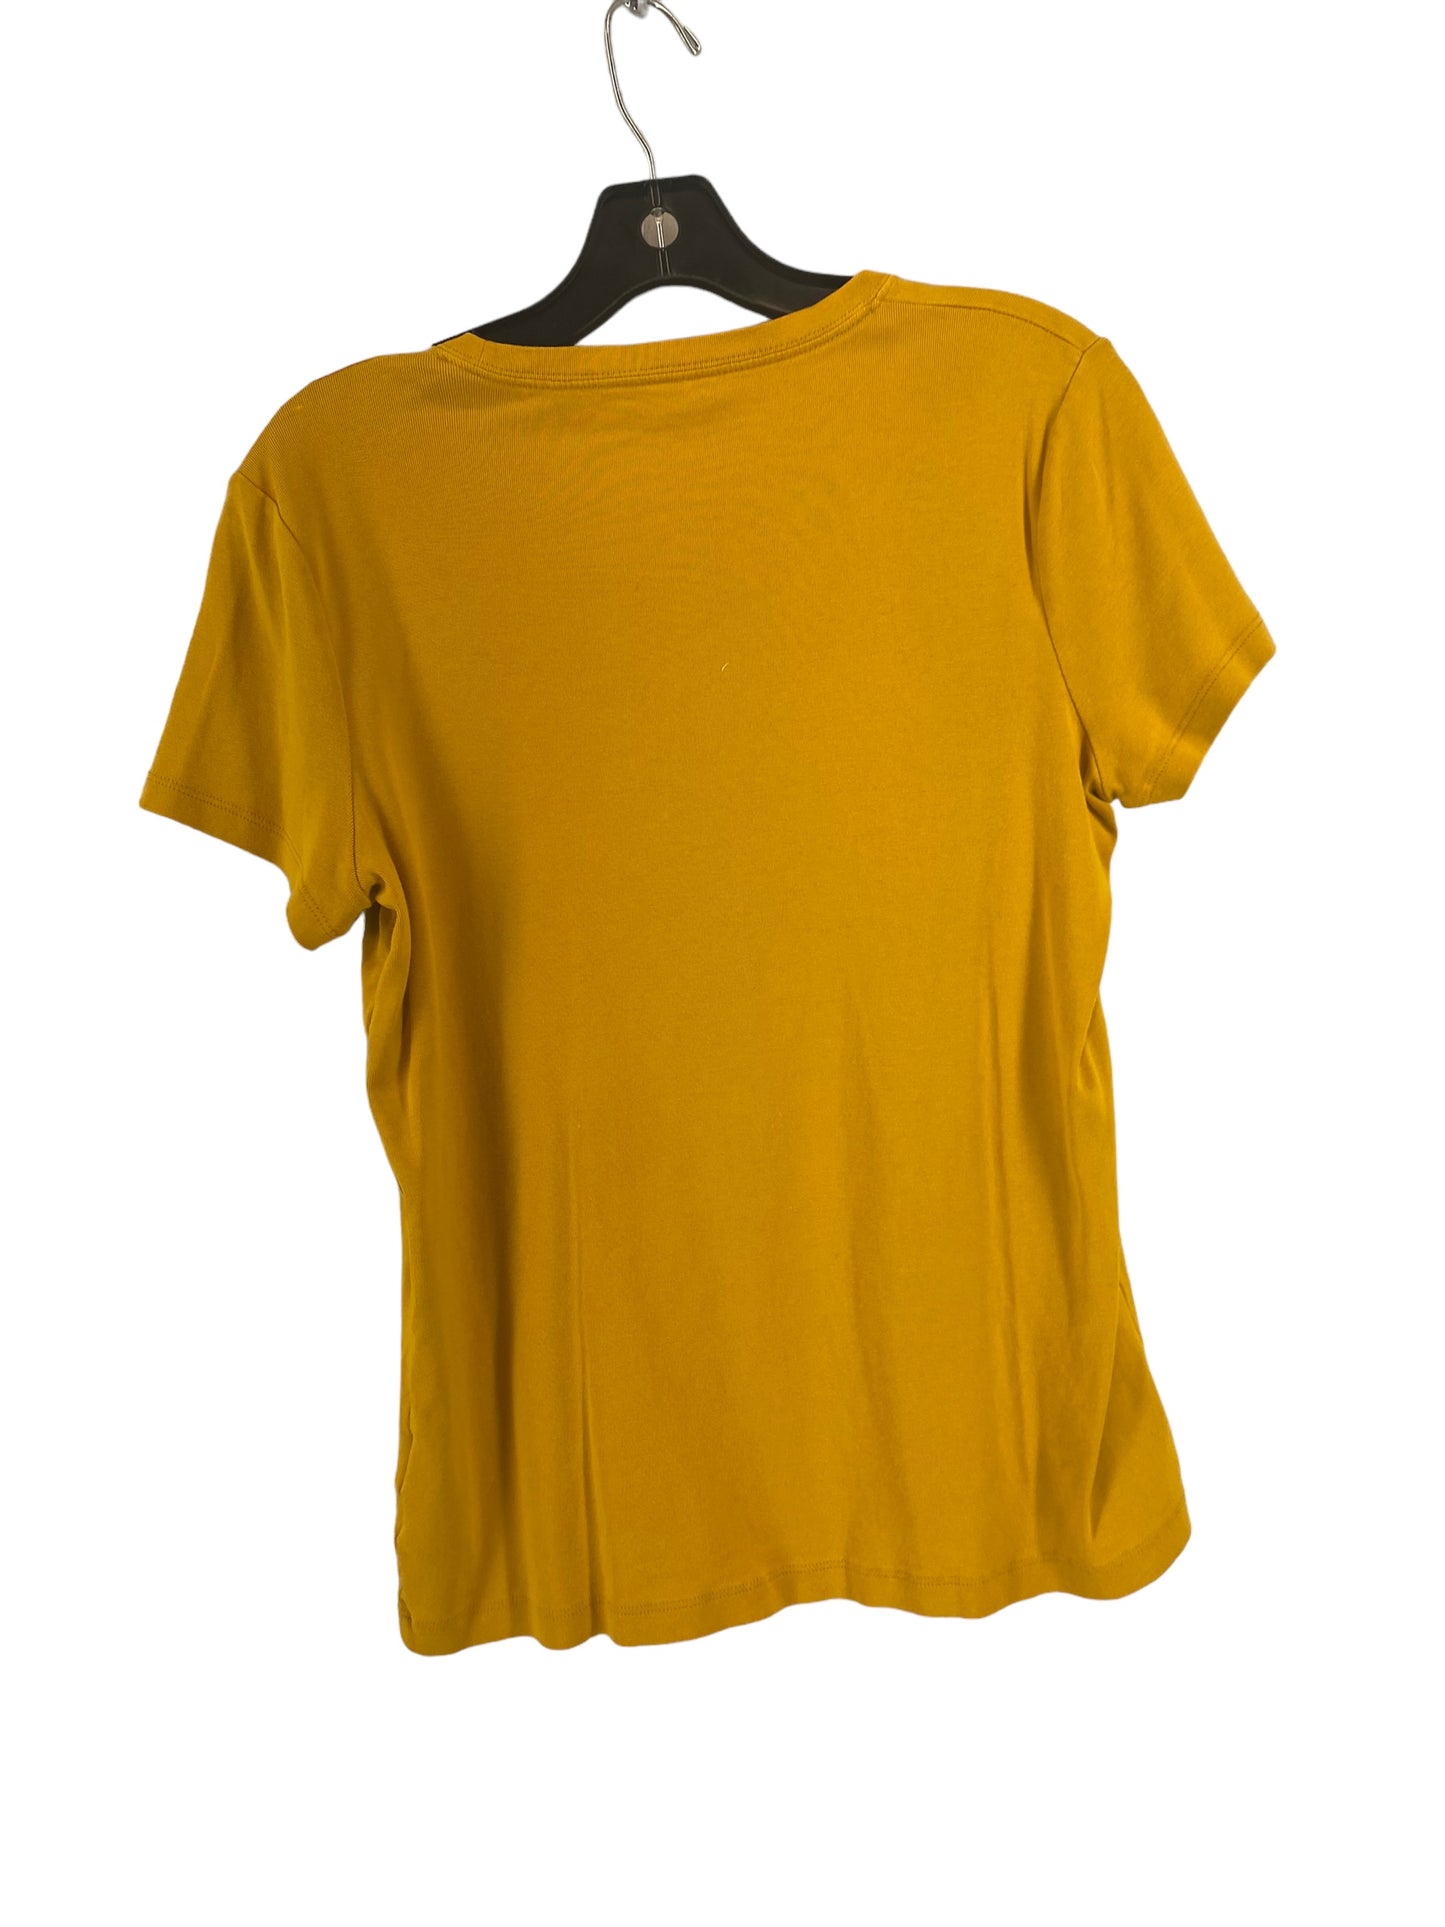 Top Short Sleeve Basic By Jones New York  Size: L